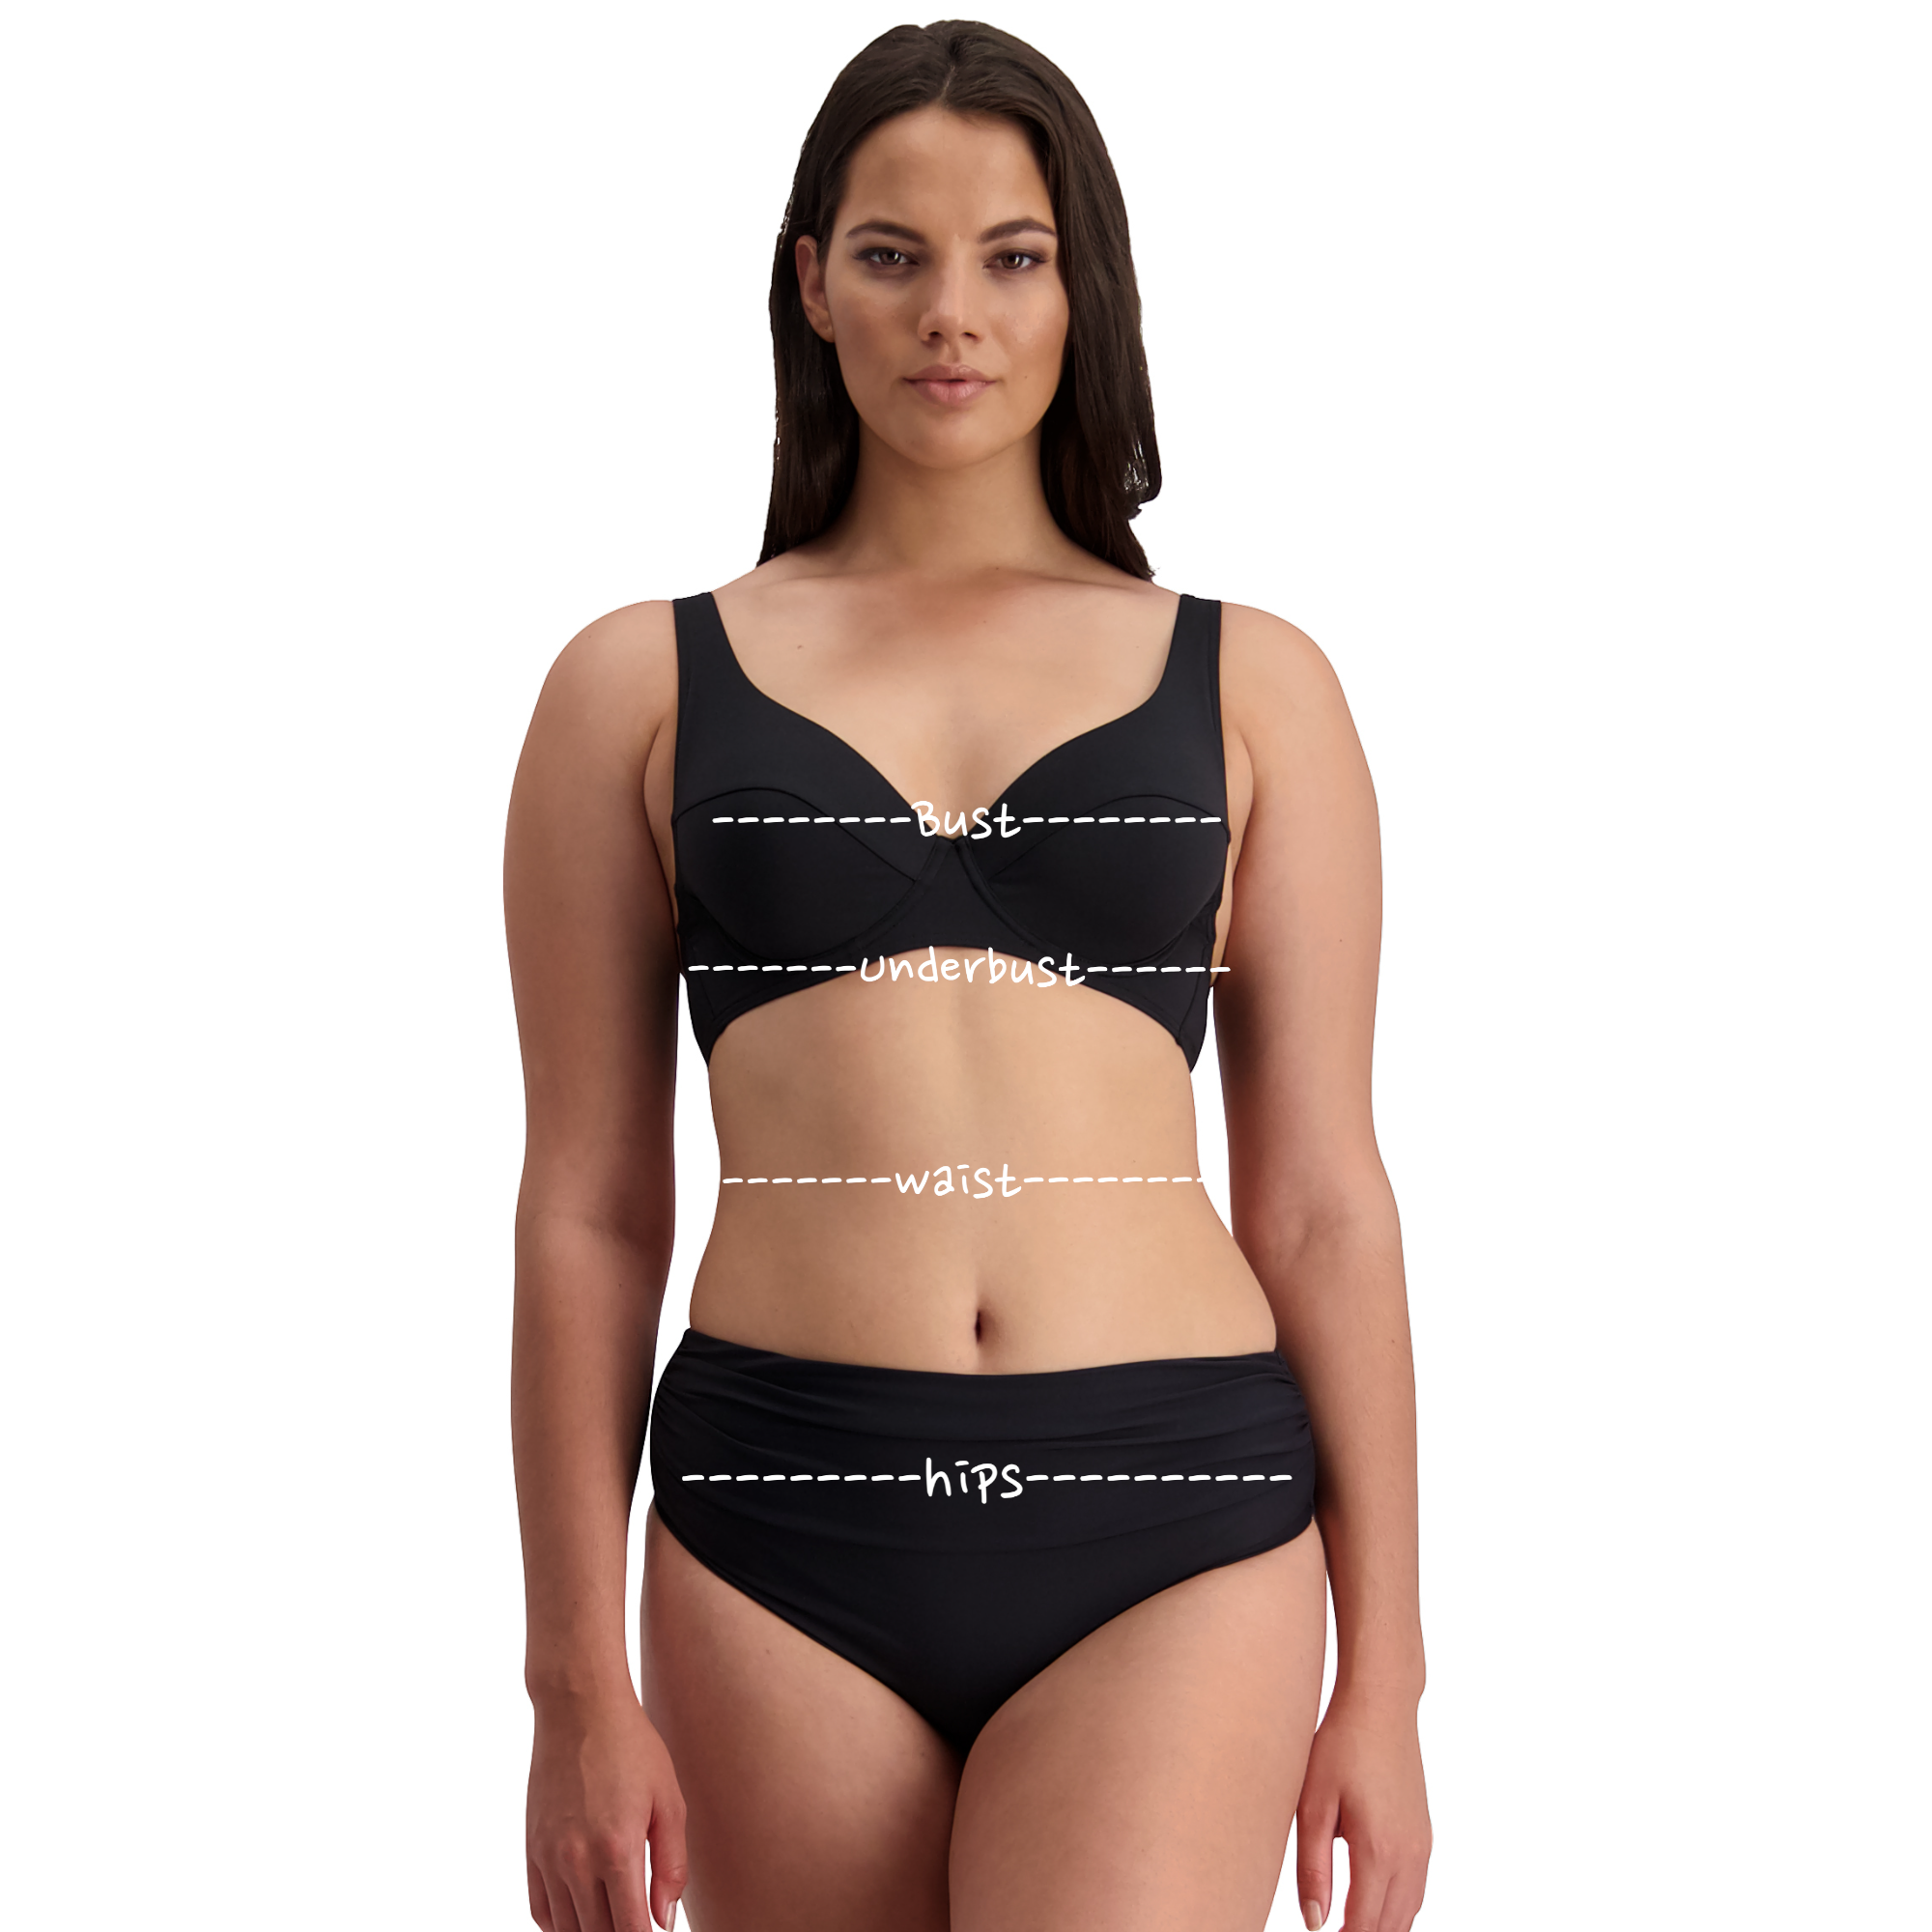 Size chart small waist larger bust natural figure in black bikini